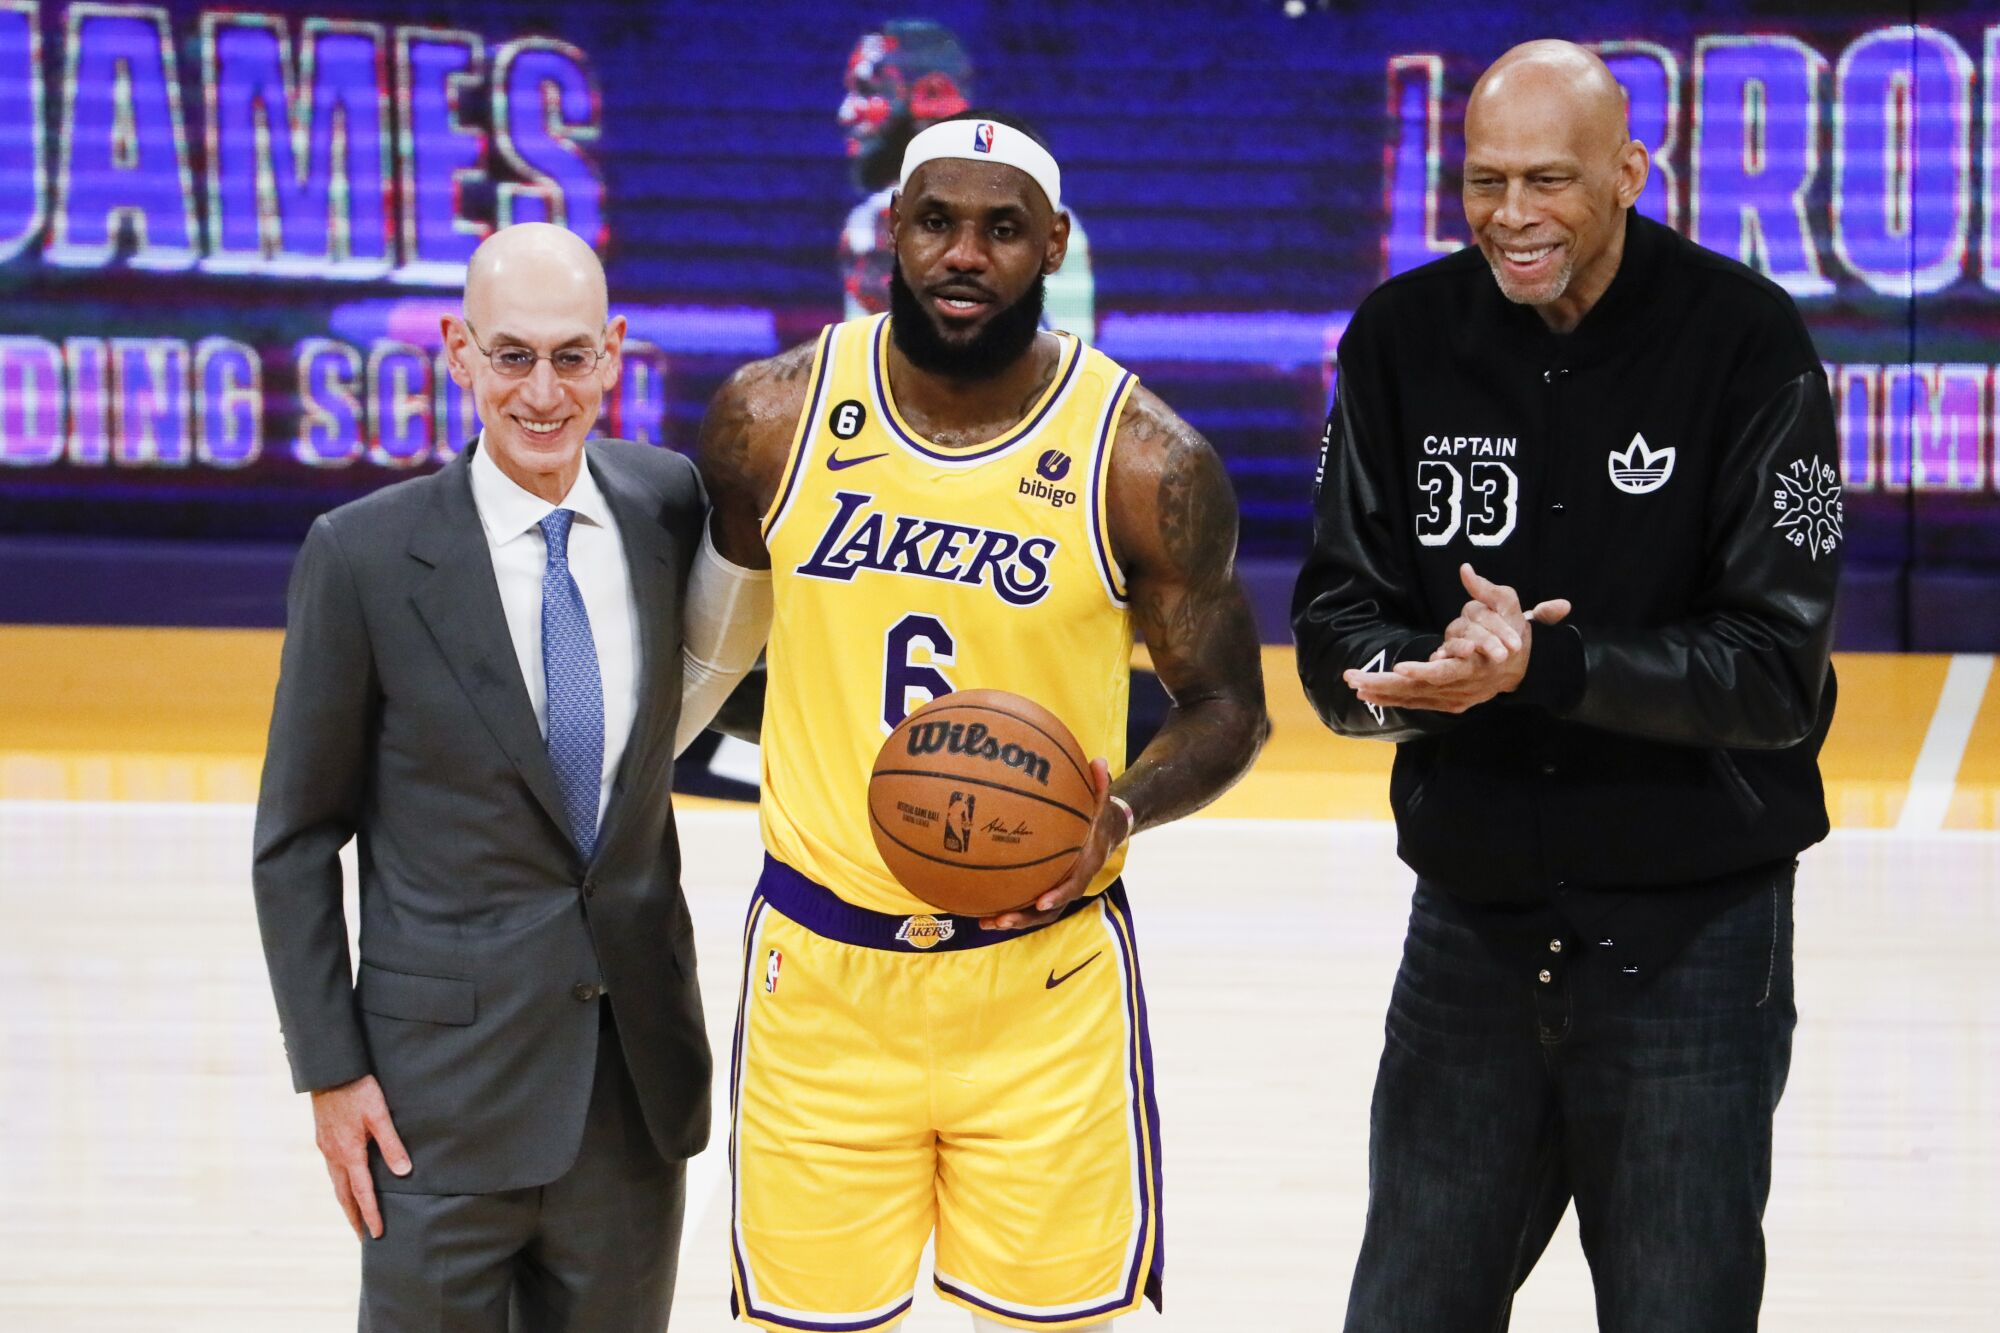 LeBron James, center, poses with NBA Commissioner Adam Silver, left, and Kareem Abdul-Jabbar.